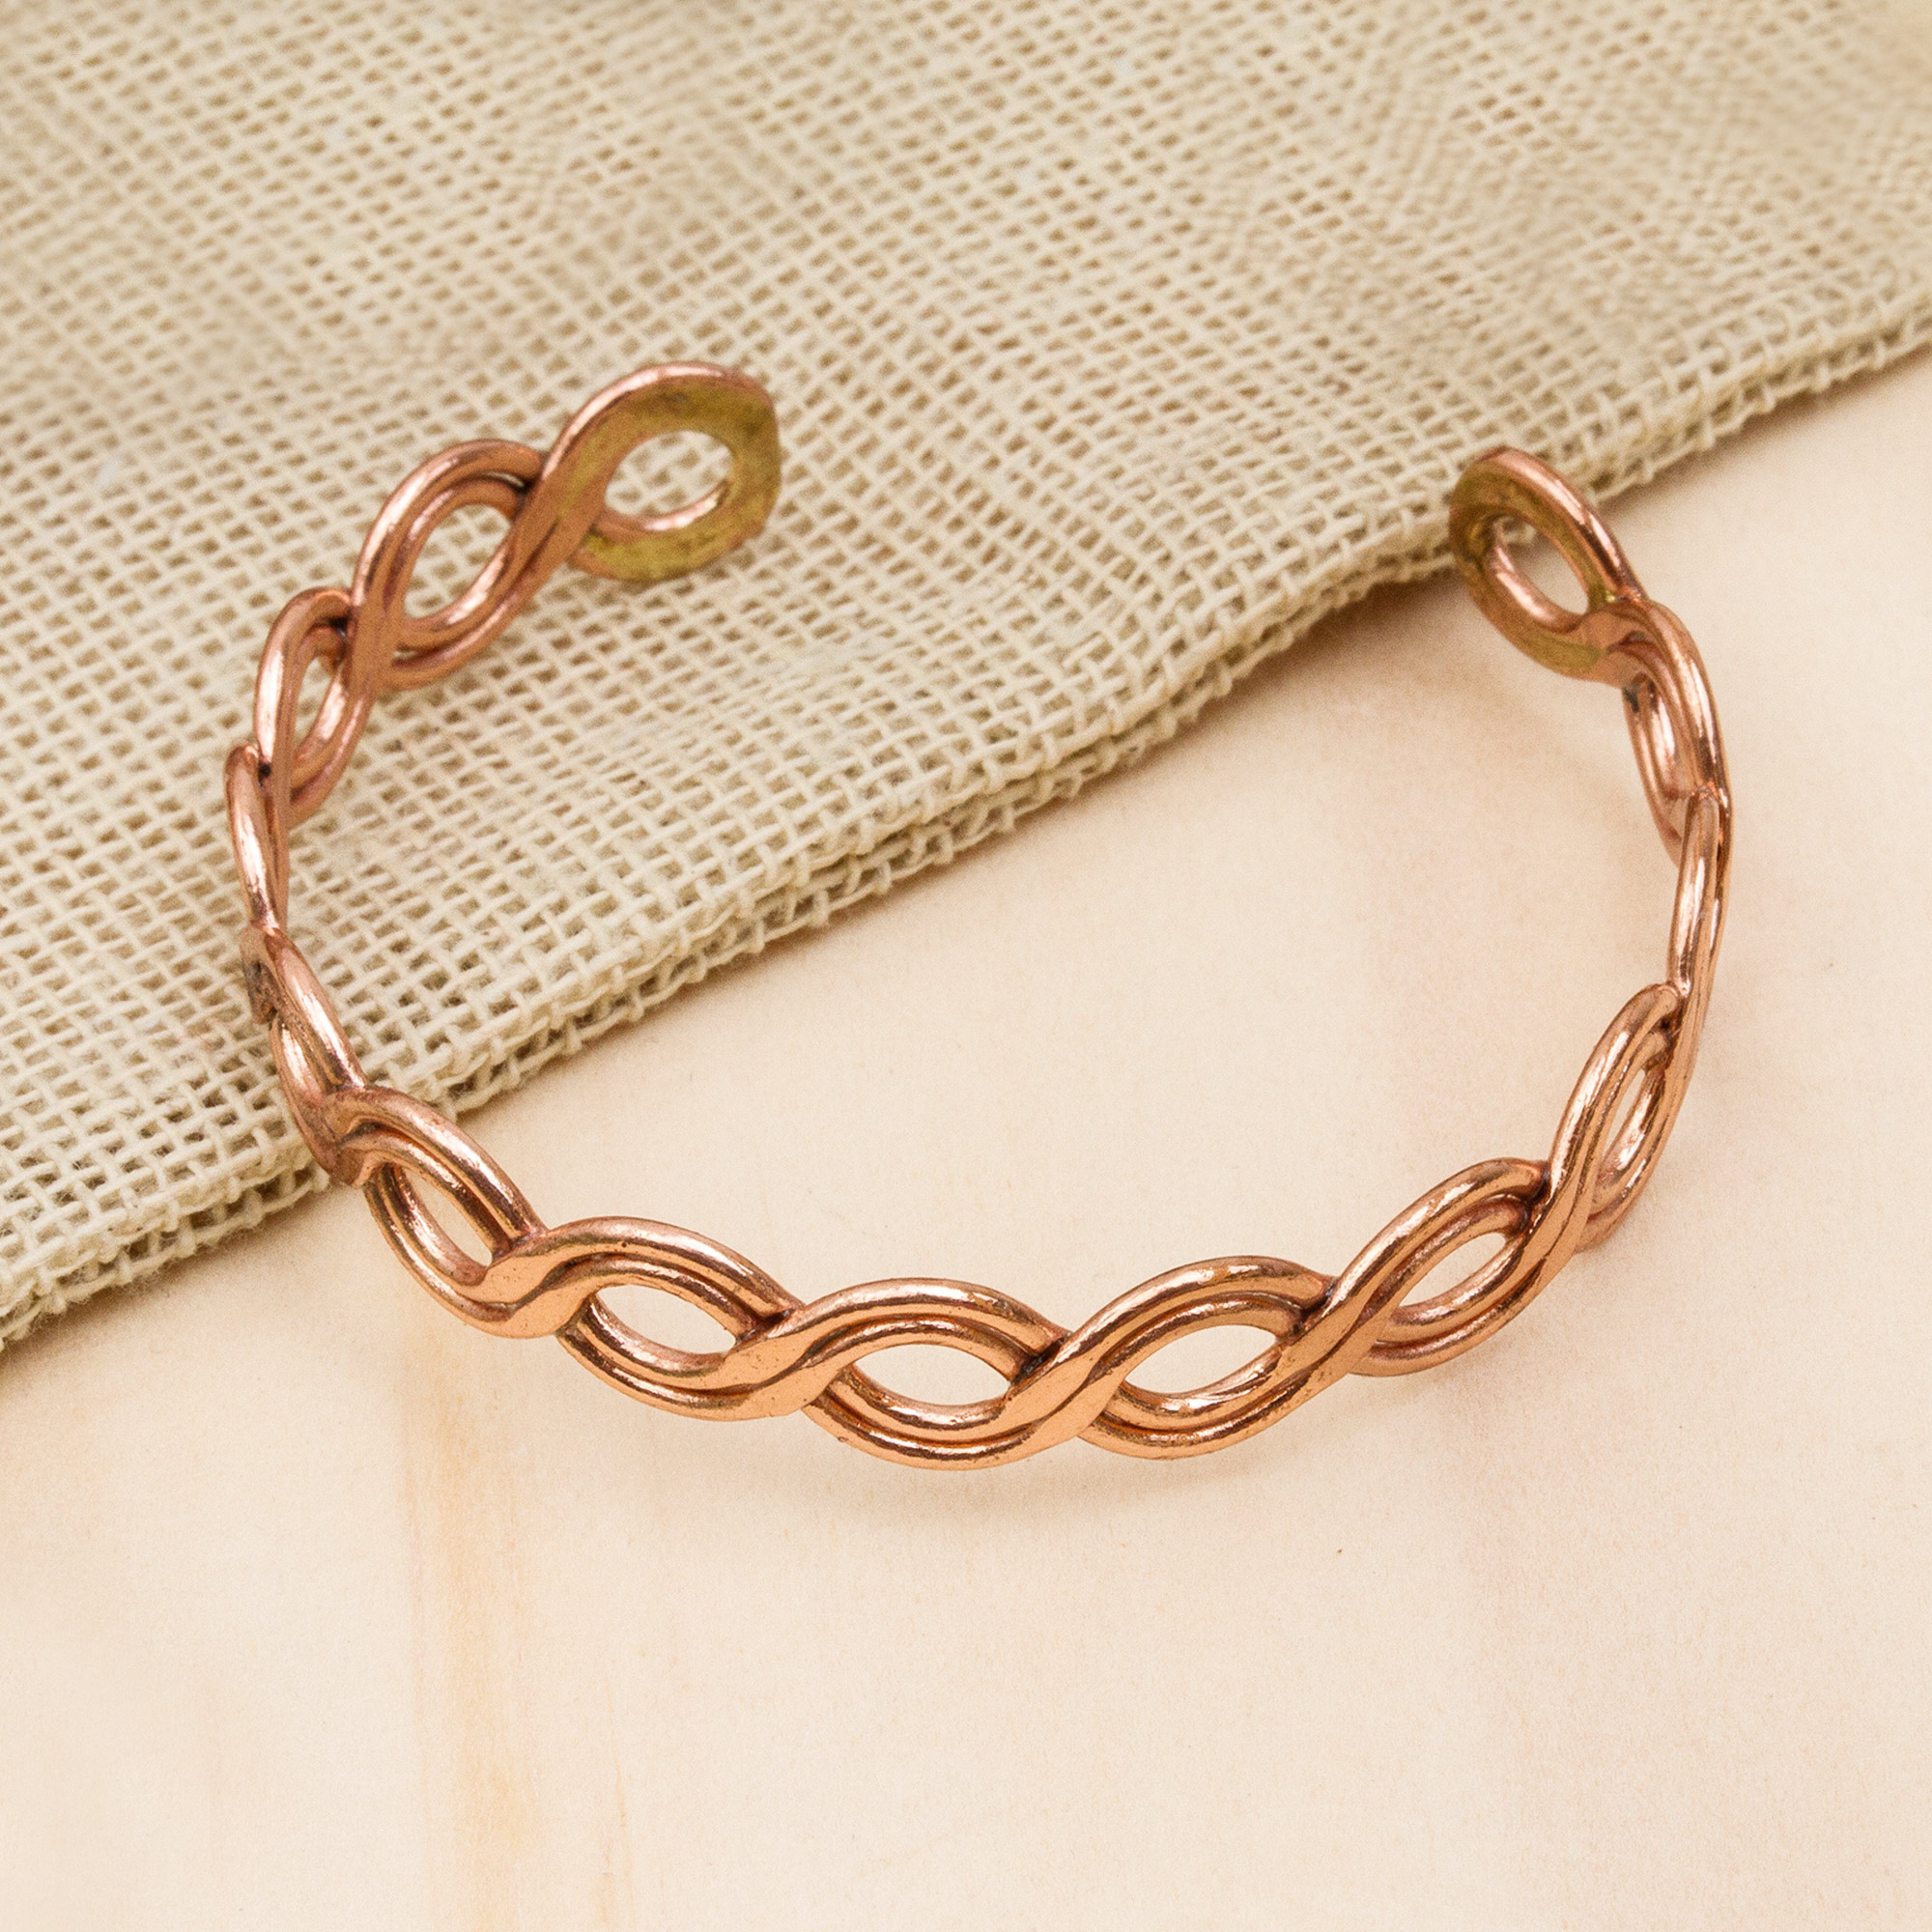 Weave Motif Copper Cuff Bracelet from Mexico - Brilliant Beauty | NOVICA